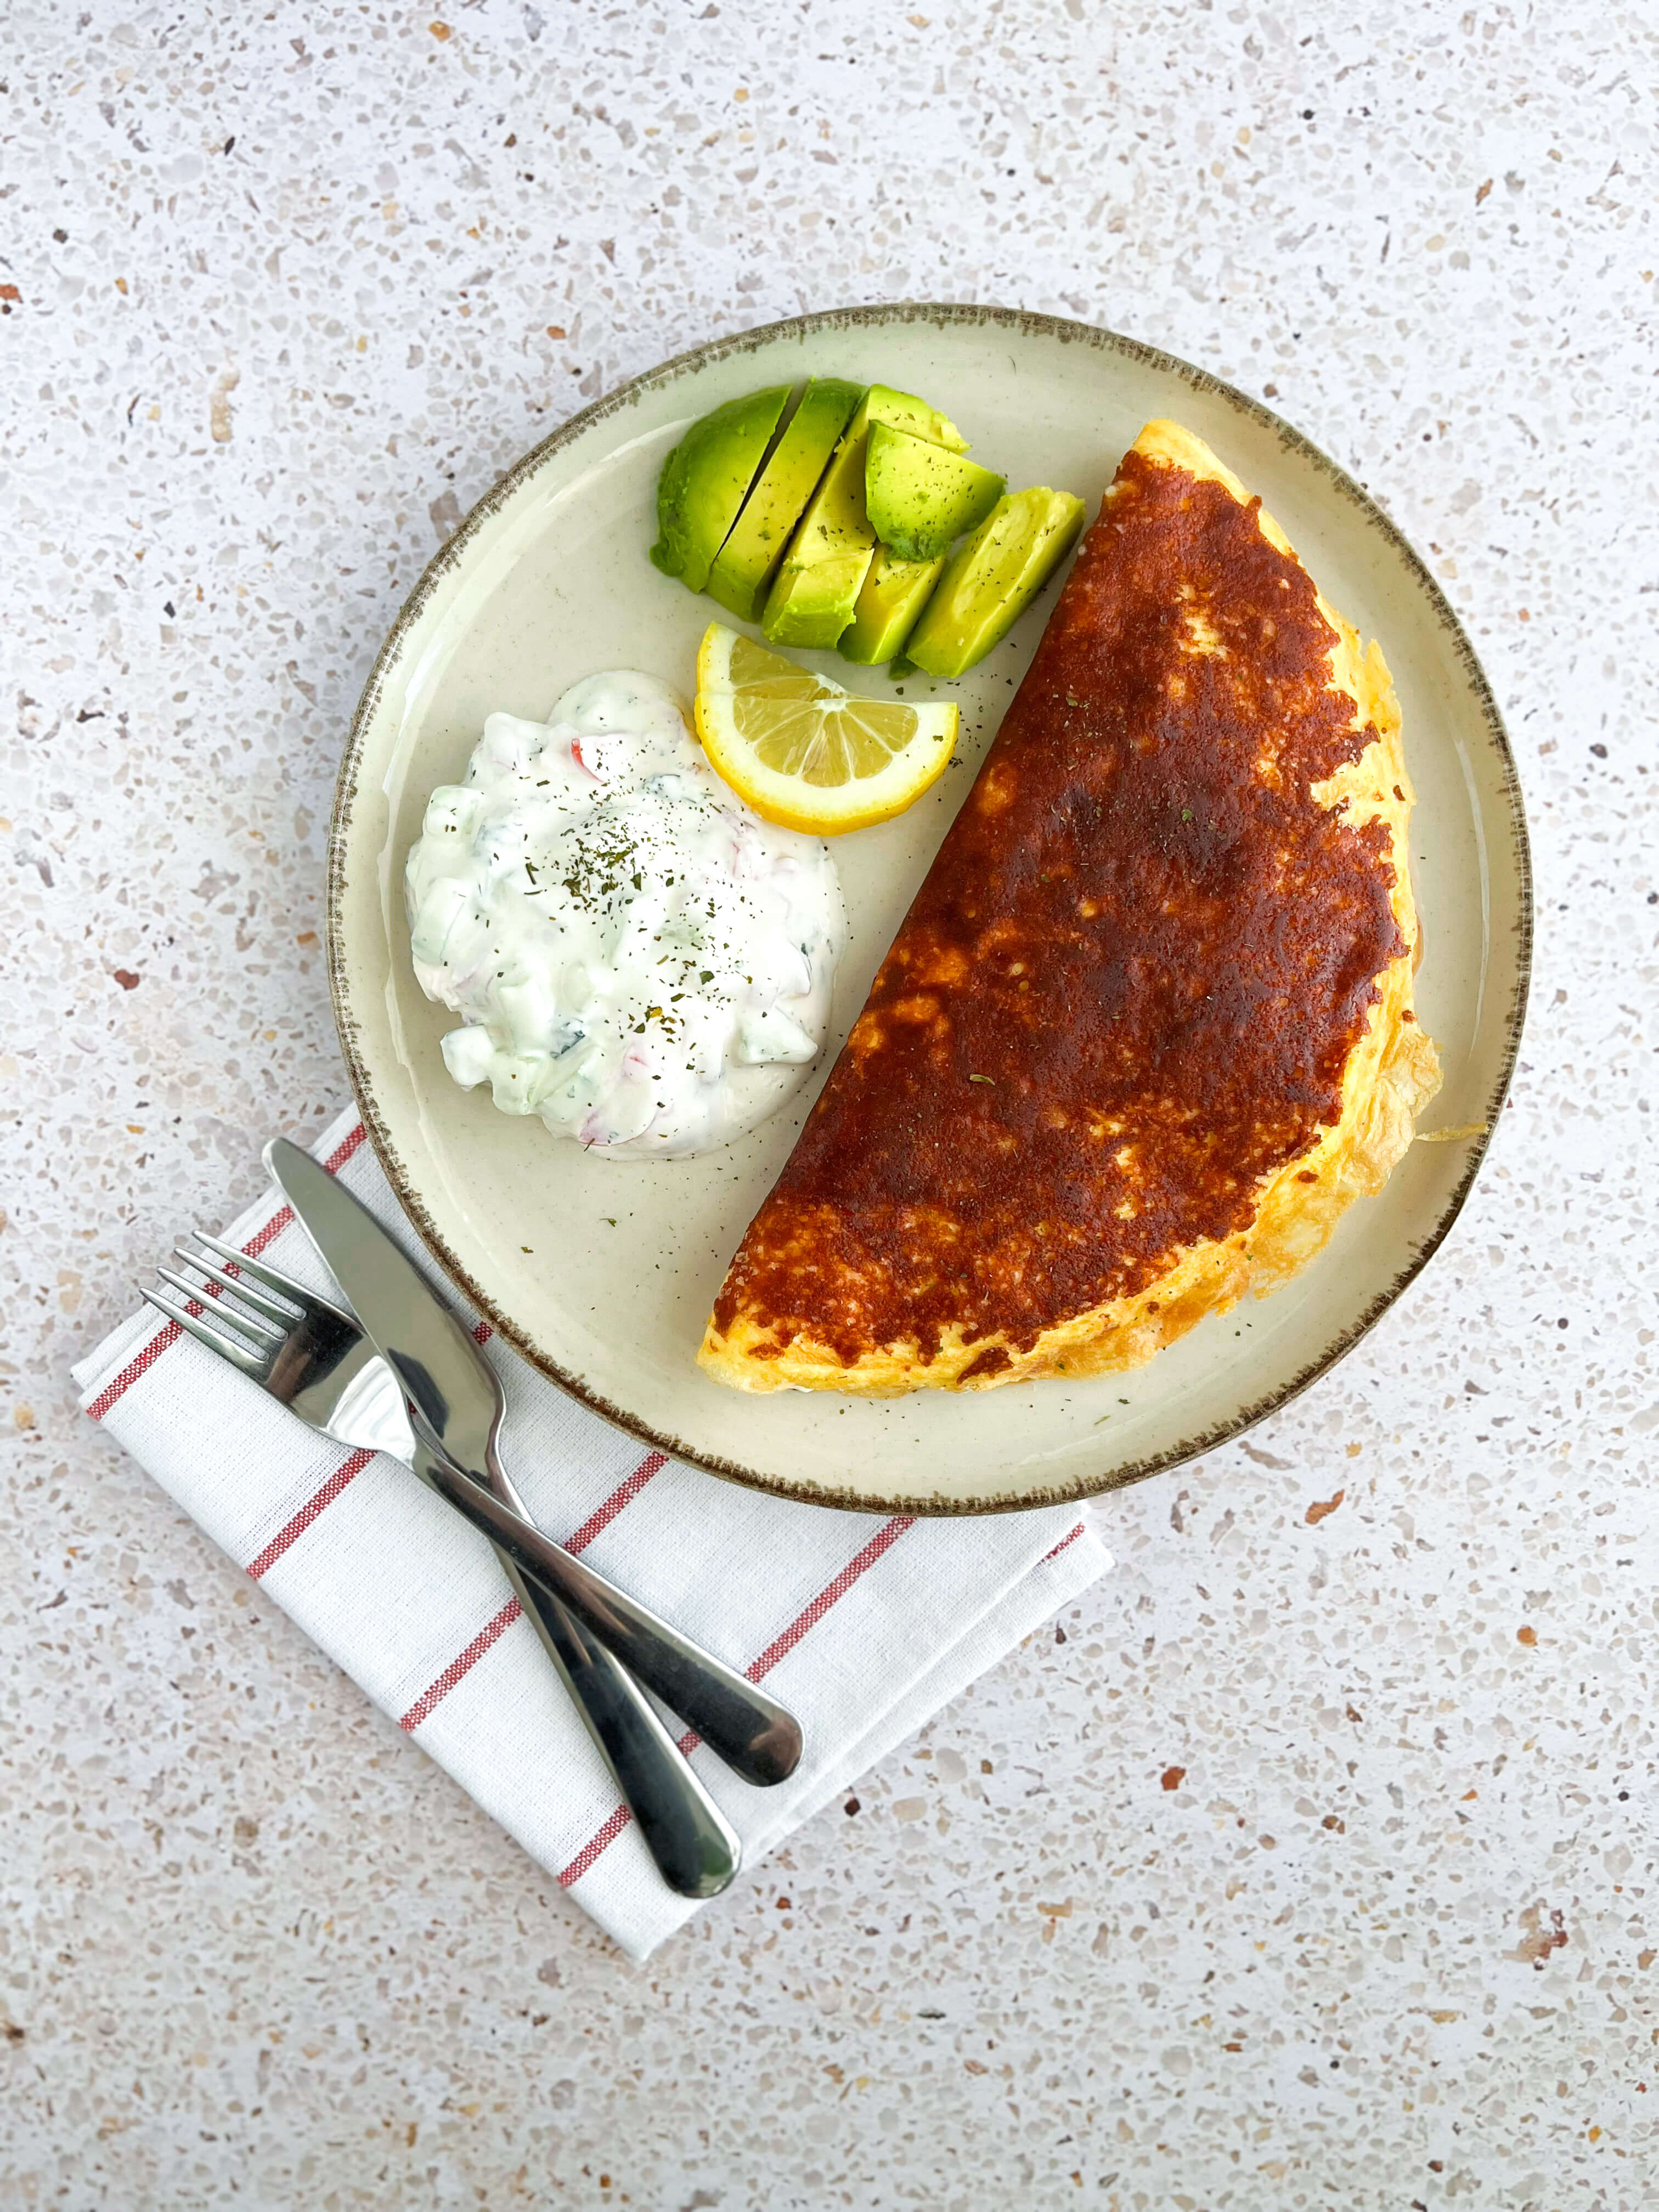 hrskavi keto omlet sa mocarelom je uzbudljiv keto doručak